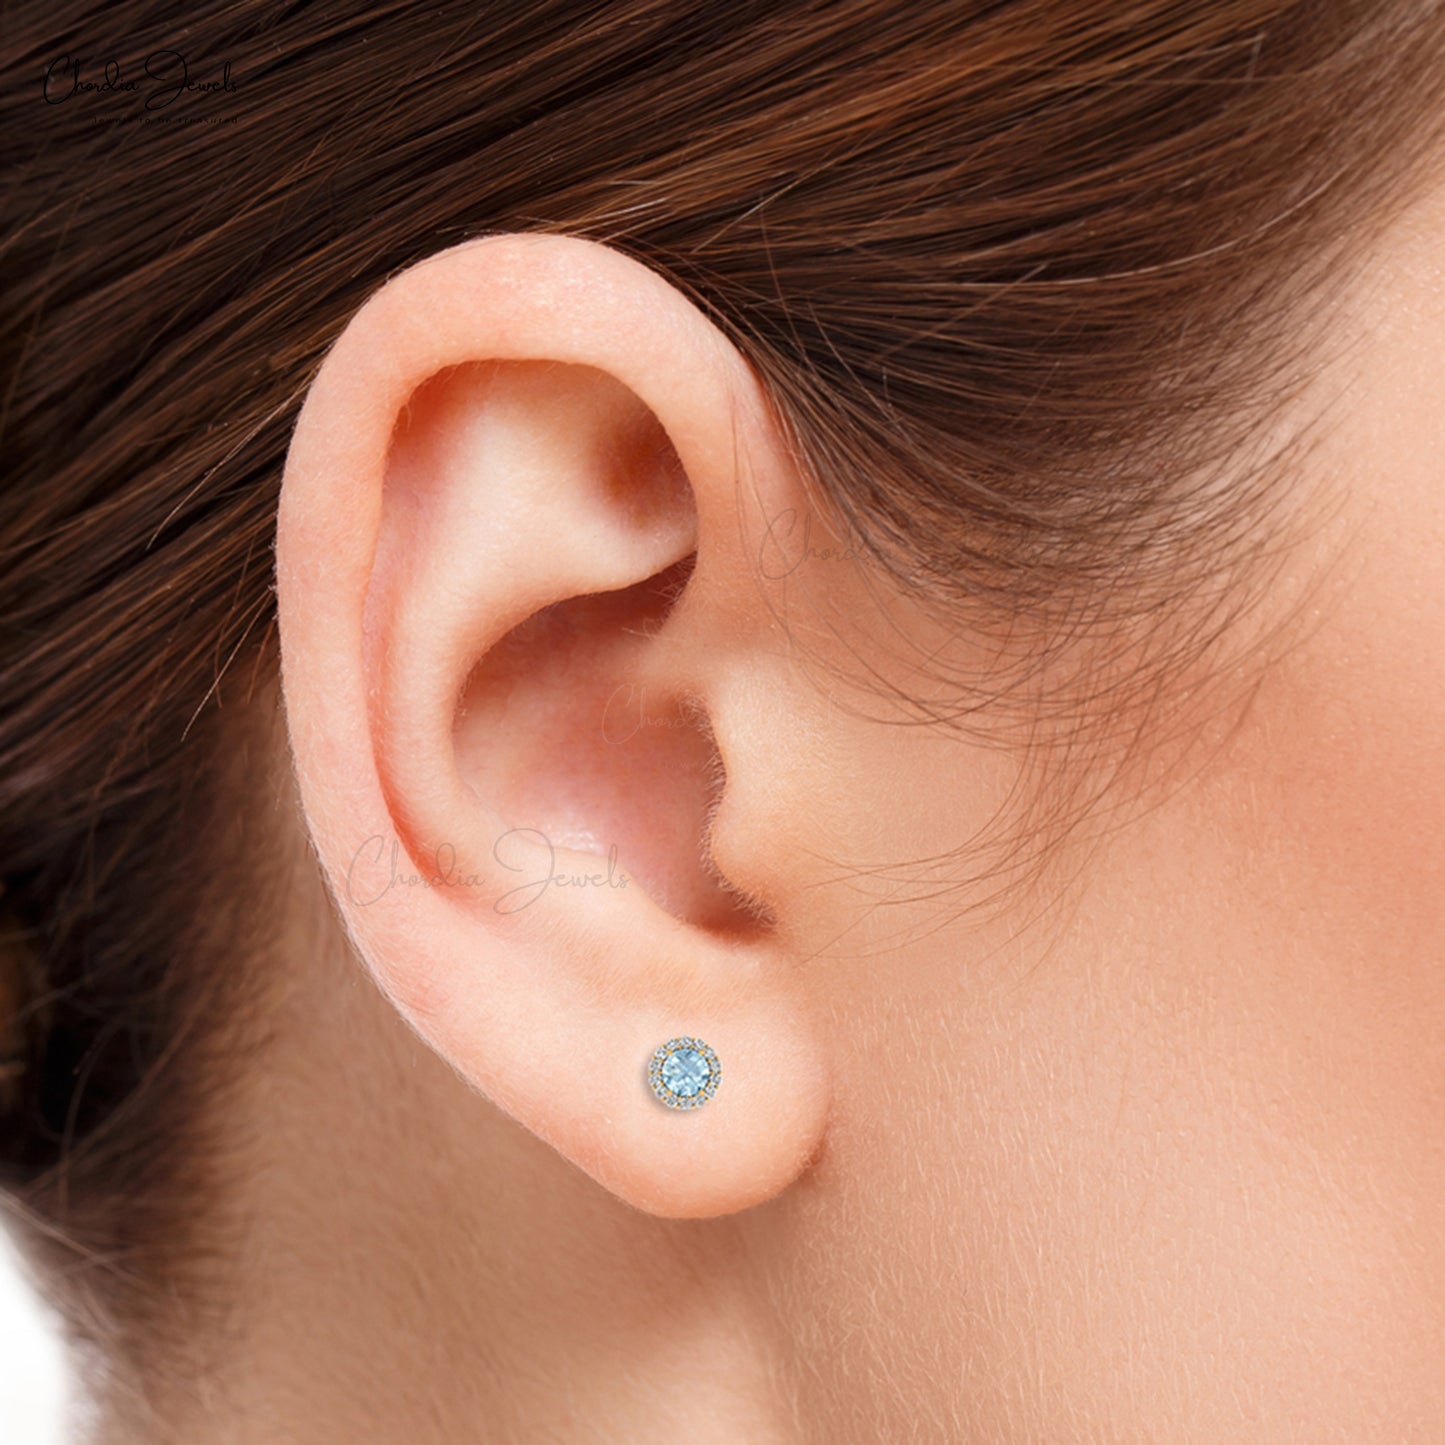 Brilliant Cut Diamond Halo Earring with Round Cut Aquamarine Stone